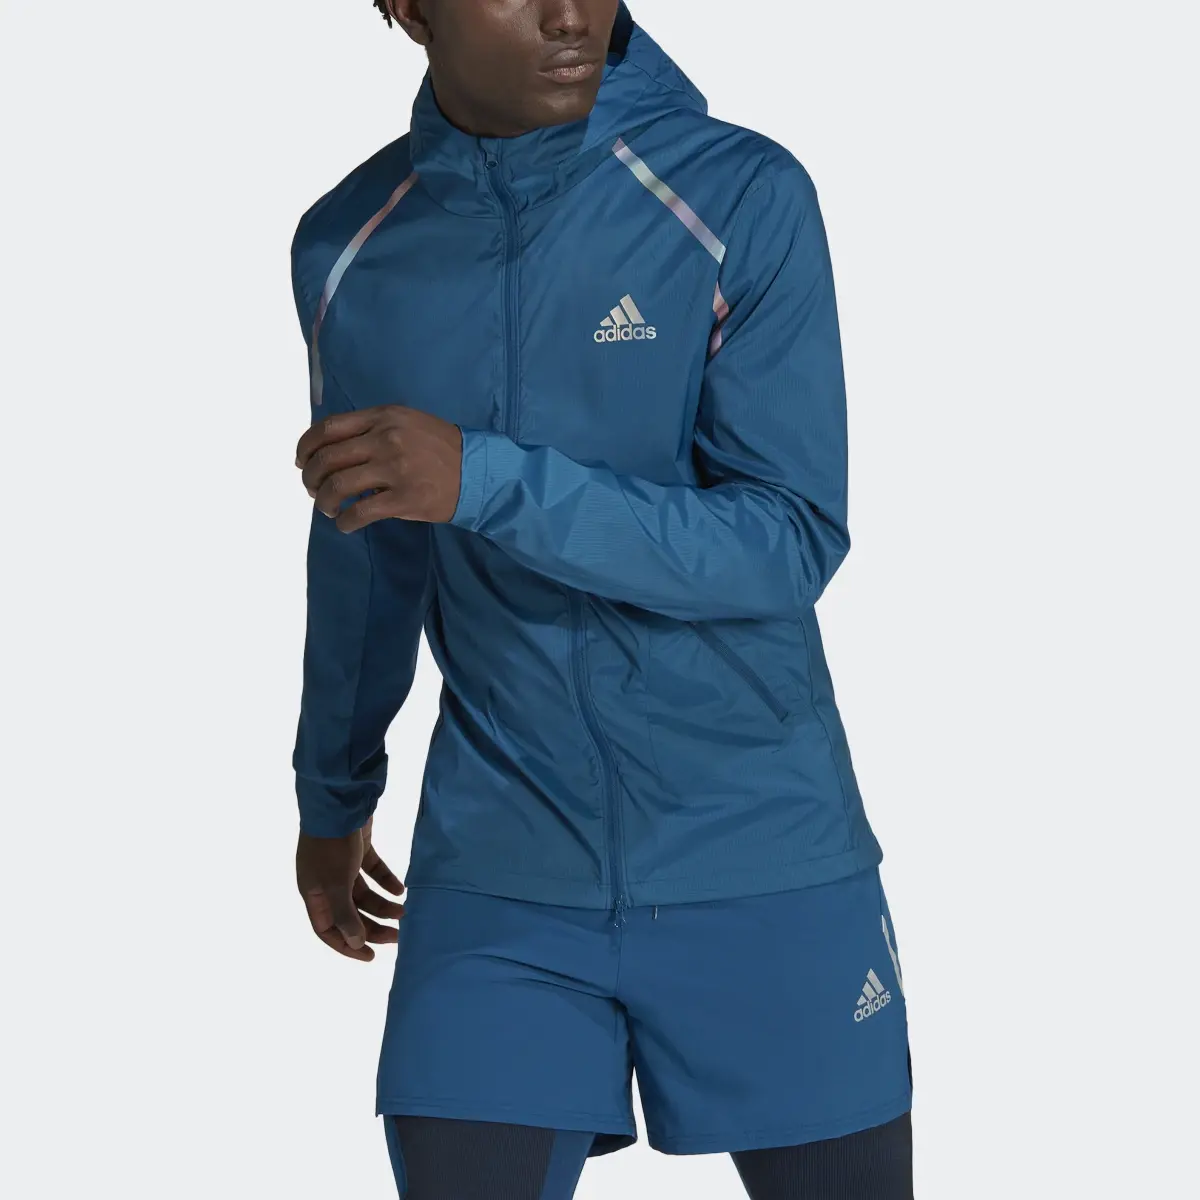 Adidas Marathon Running Jacket. 1